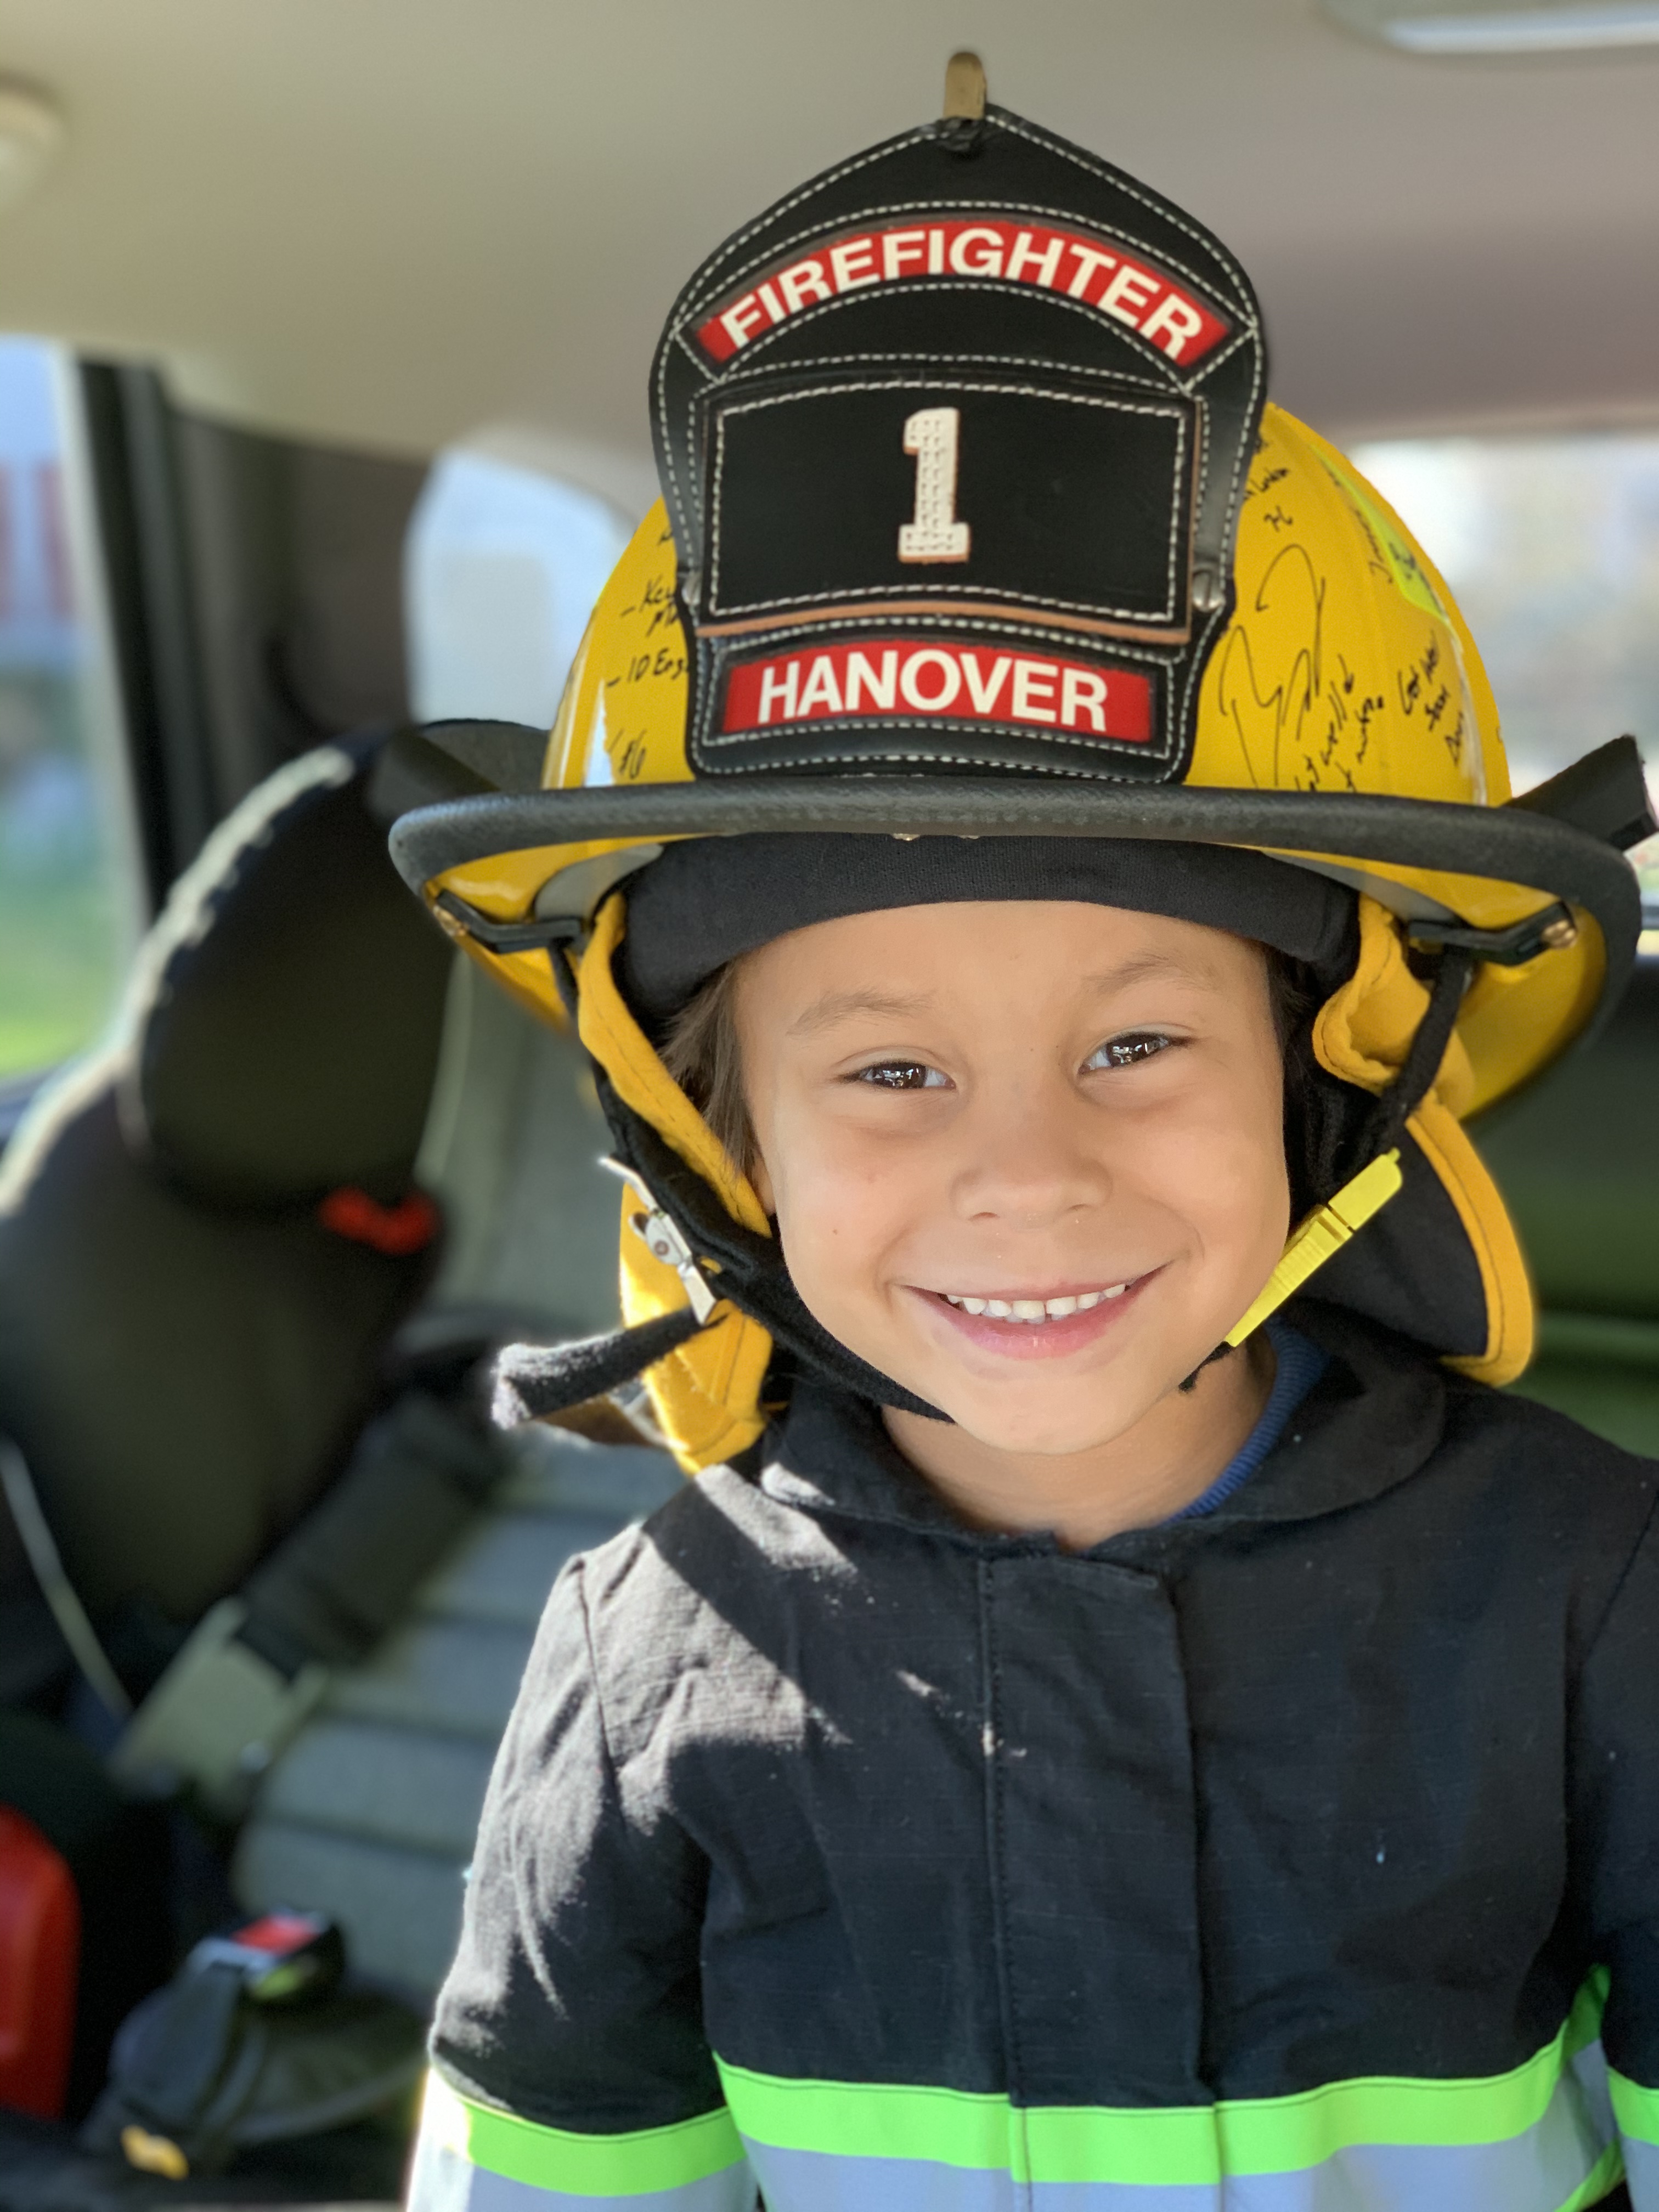 Future Hanover firefighter